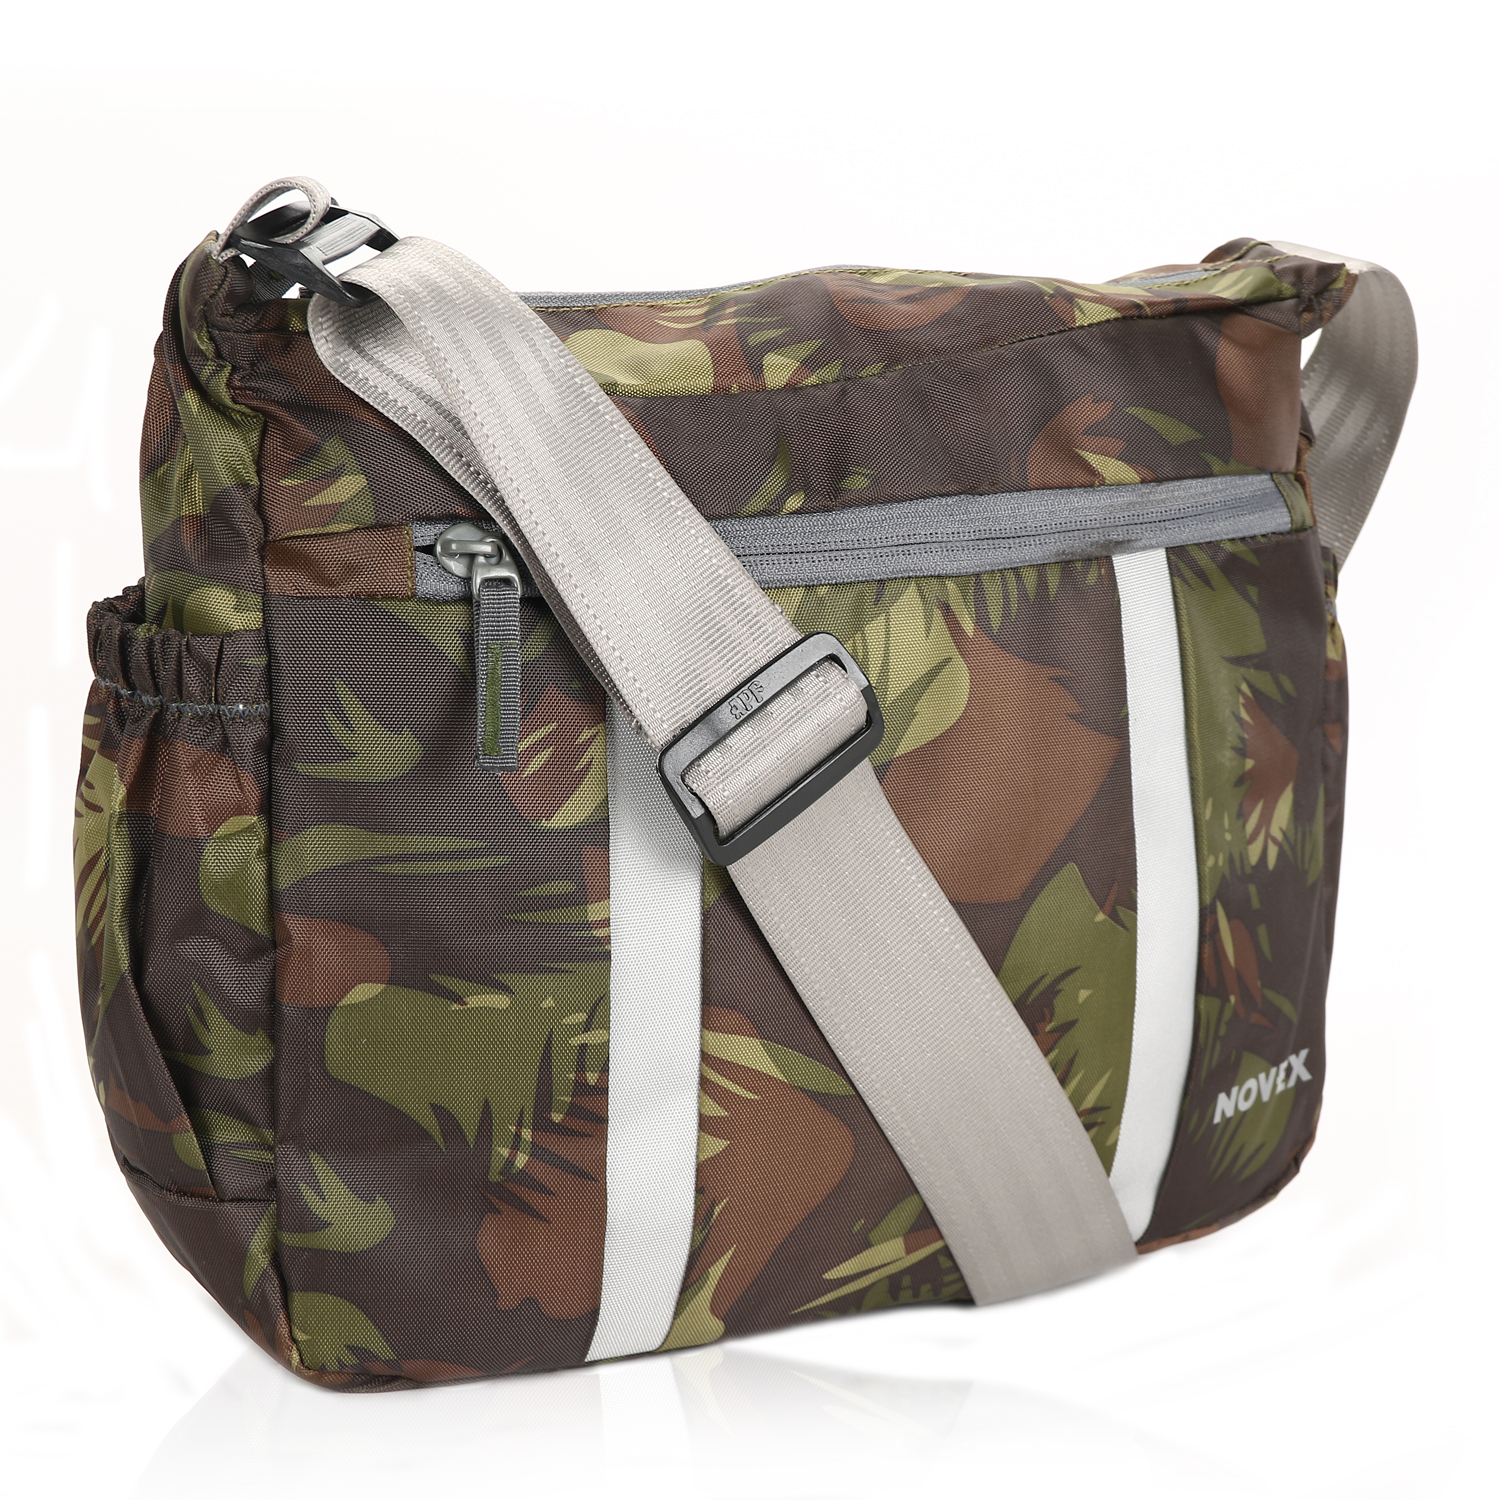 Buy Novex Evoq Camouflage Sling Bag Online @ ₹999 from ShopClues